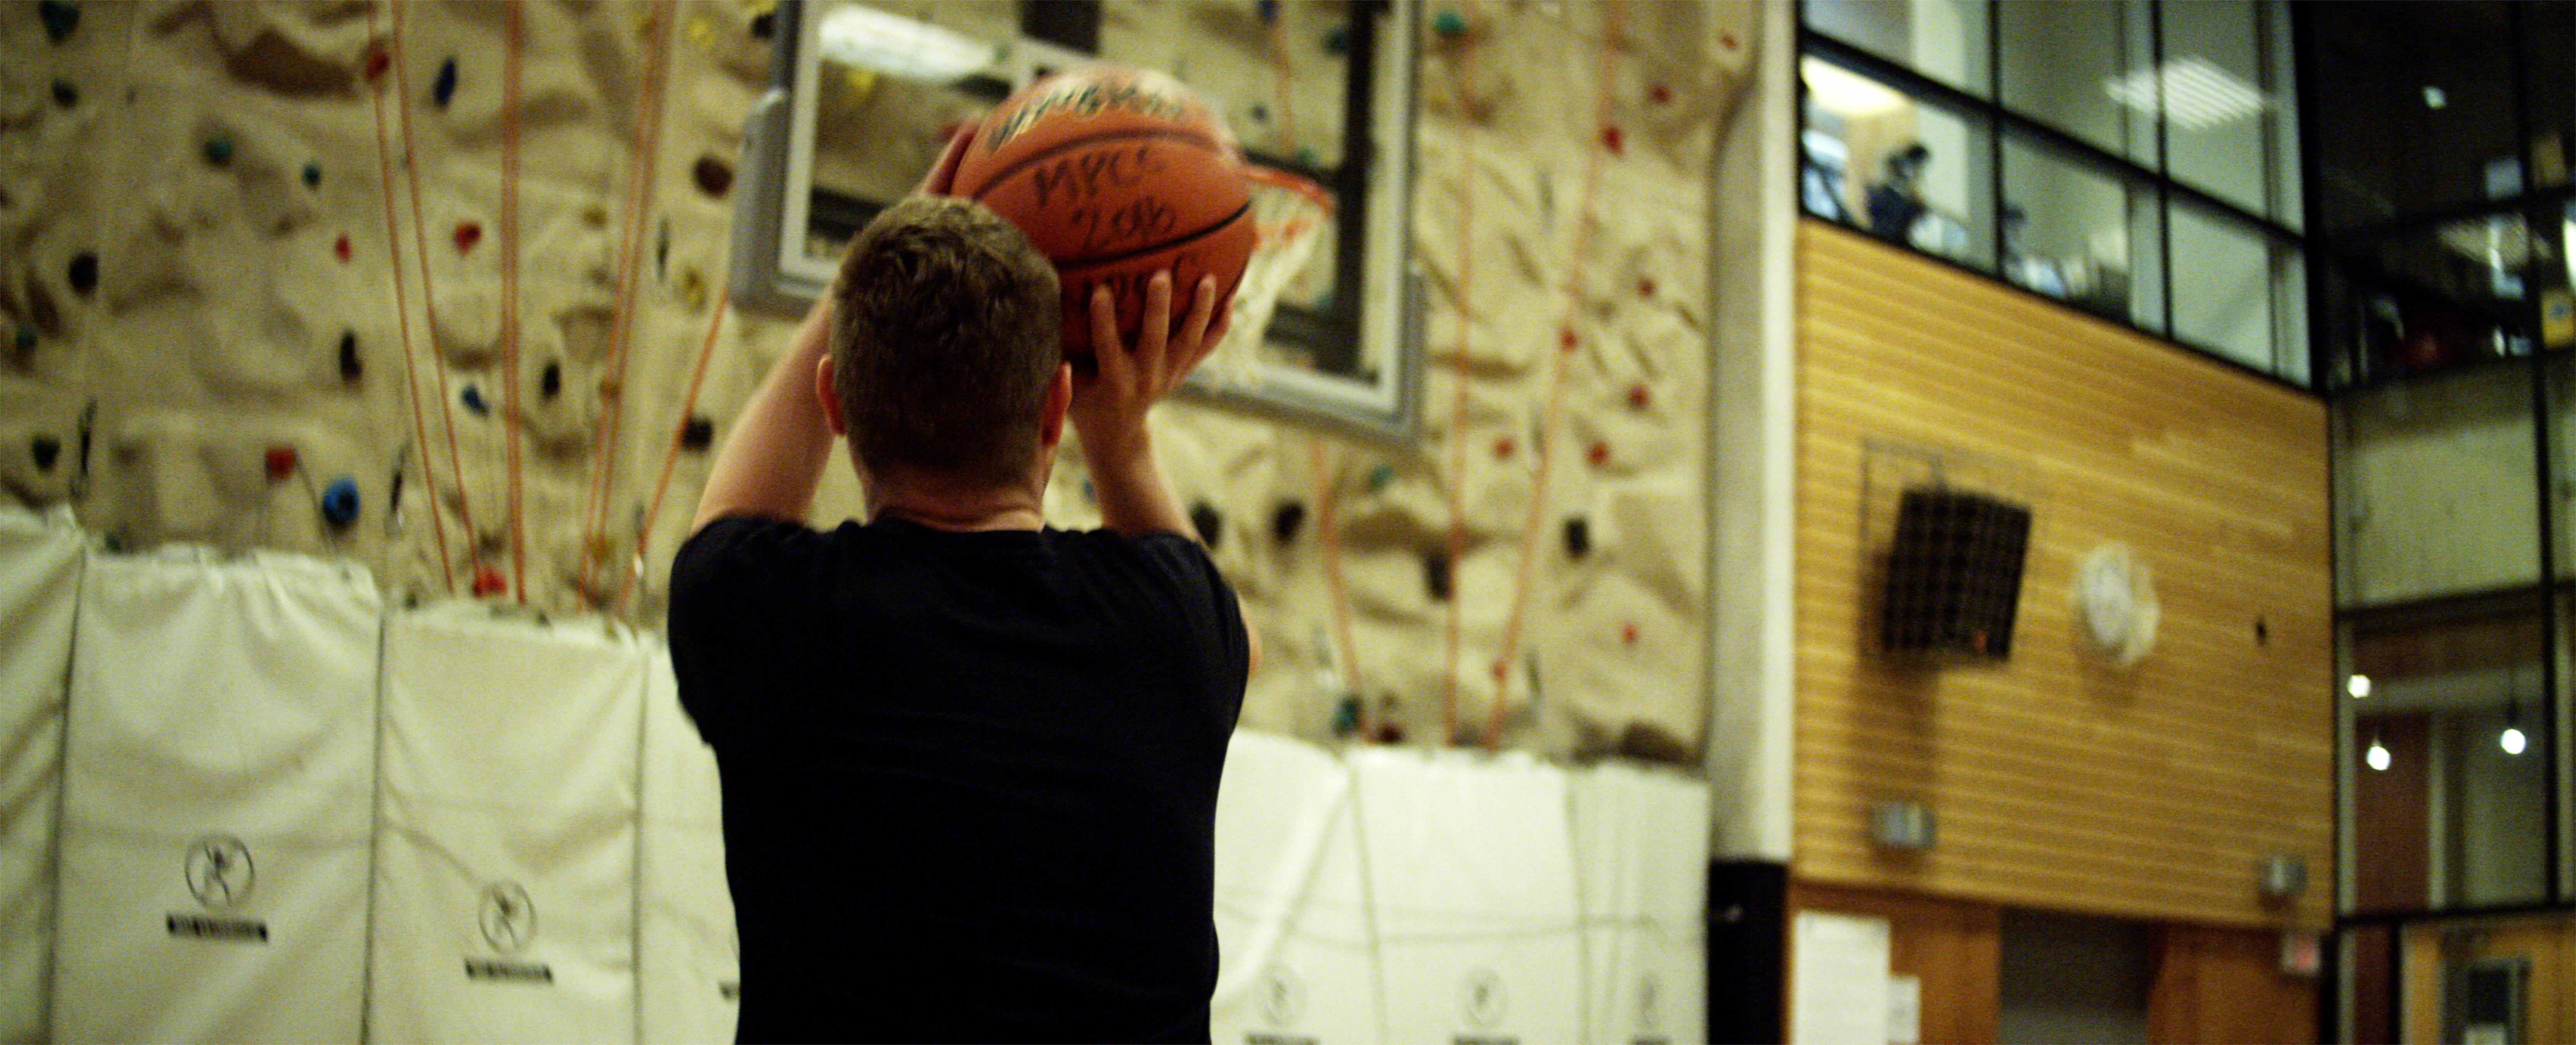 Man shooting a basketball into hoop